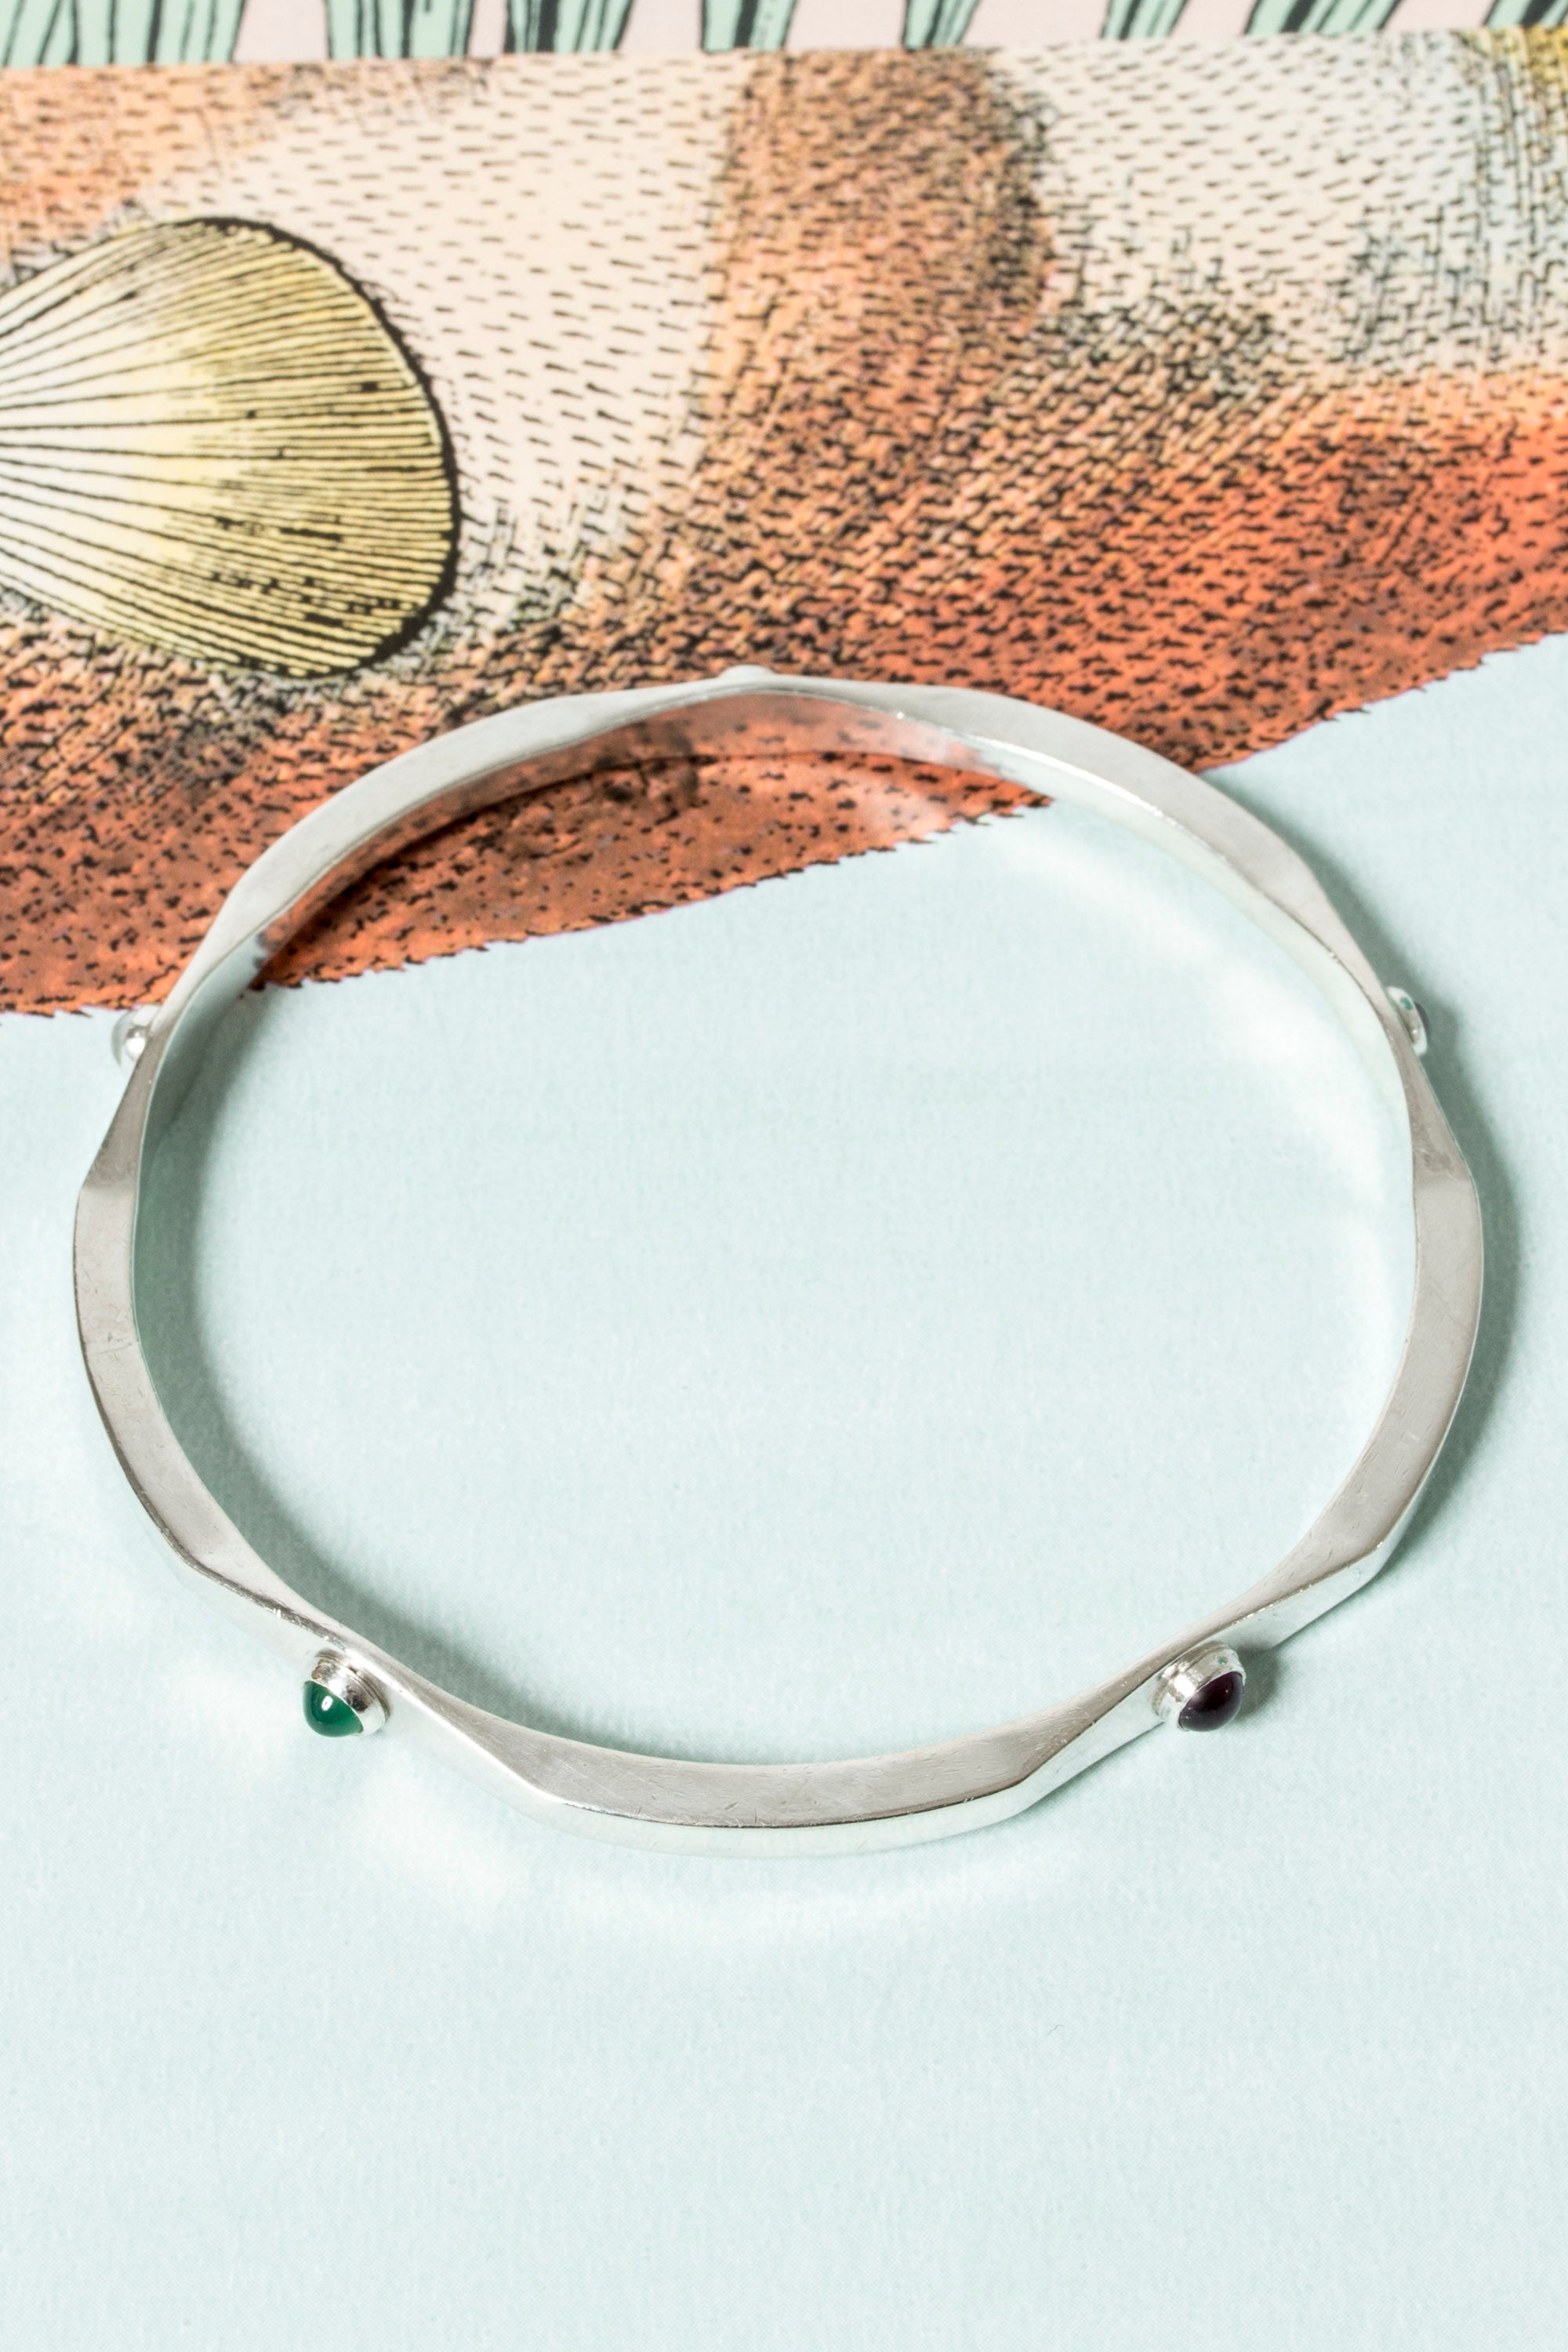 Silver and Semi-Precious Stones Bracelet by Arvo Saarela, Sweden, 1959 For Sale